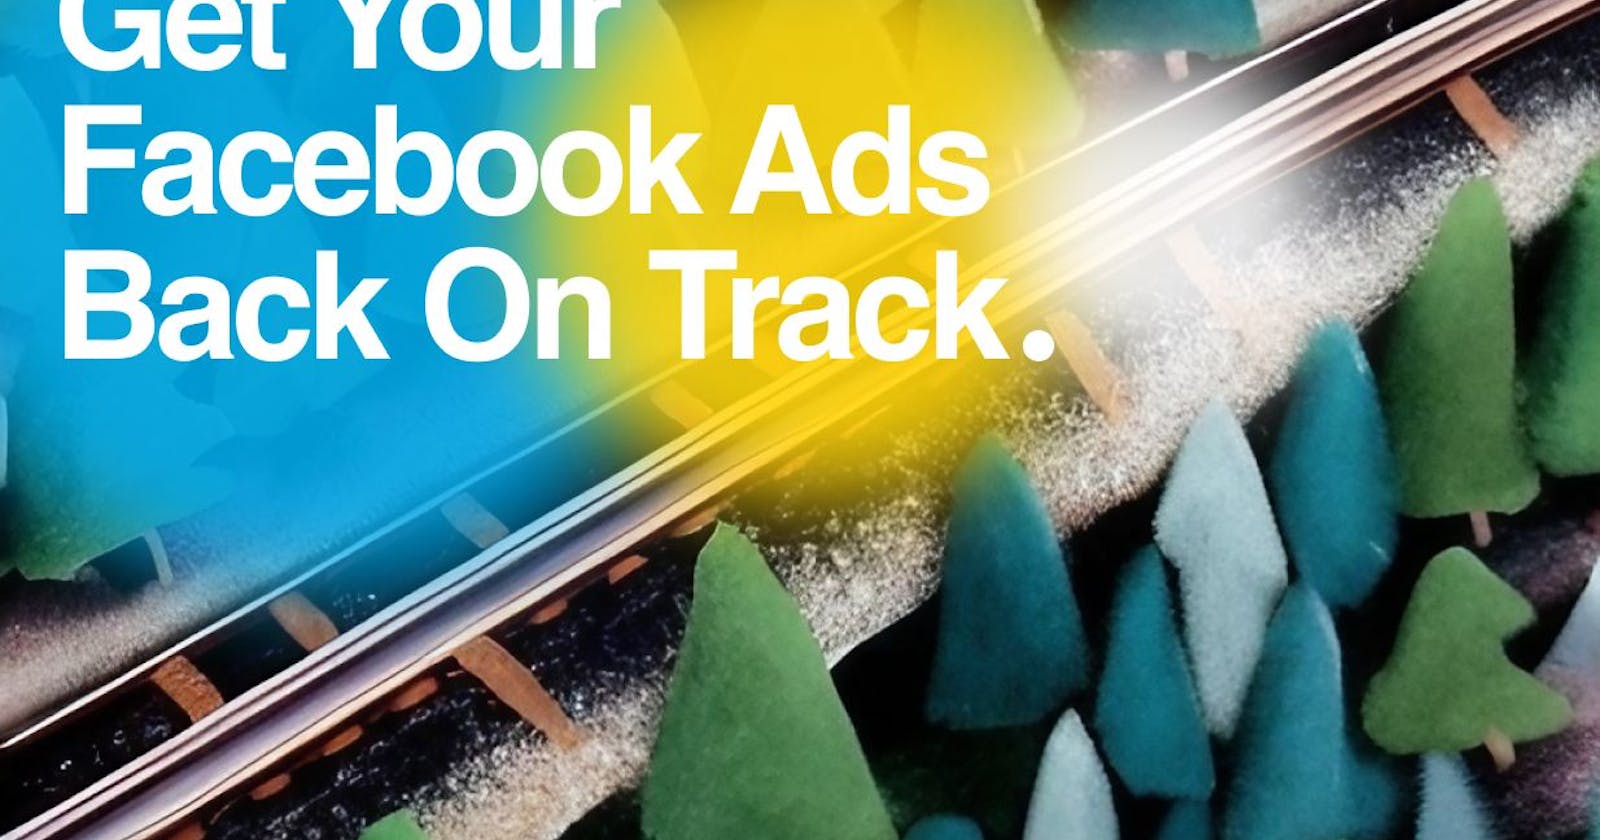 Get Your Facebook Ads Back On Track in 5 Simple Steps